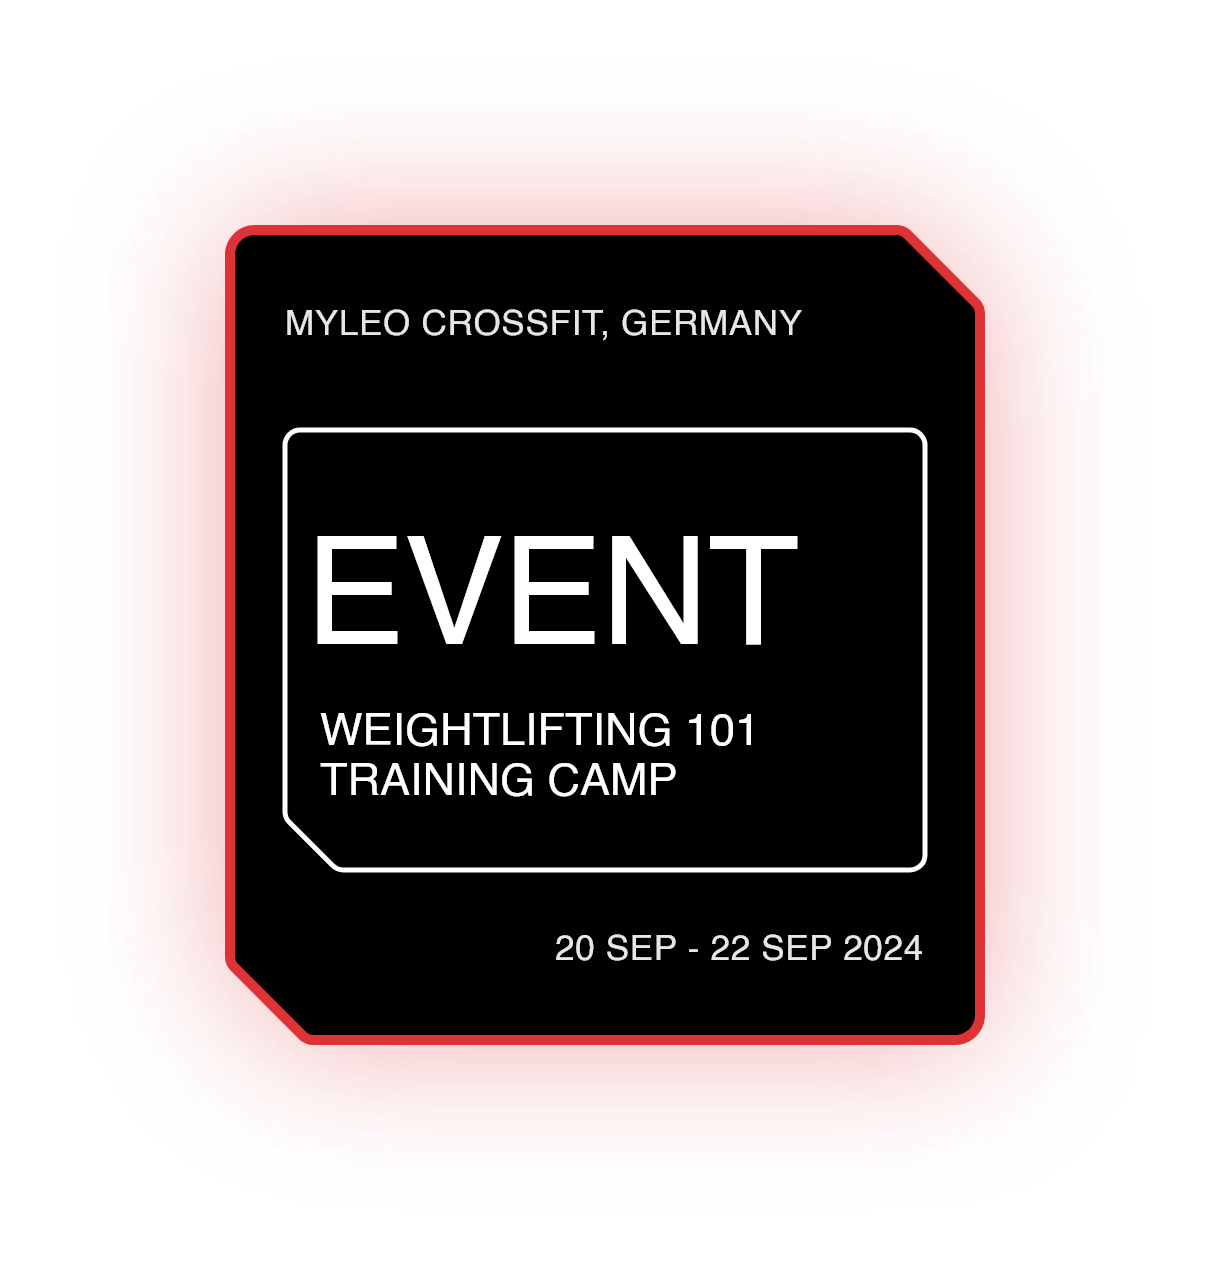 Weightlifting 101 Training Camp - Berlin, Germany